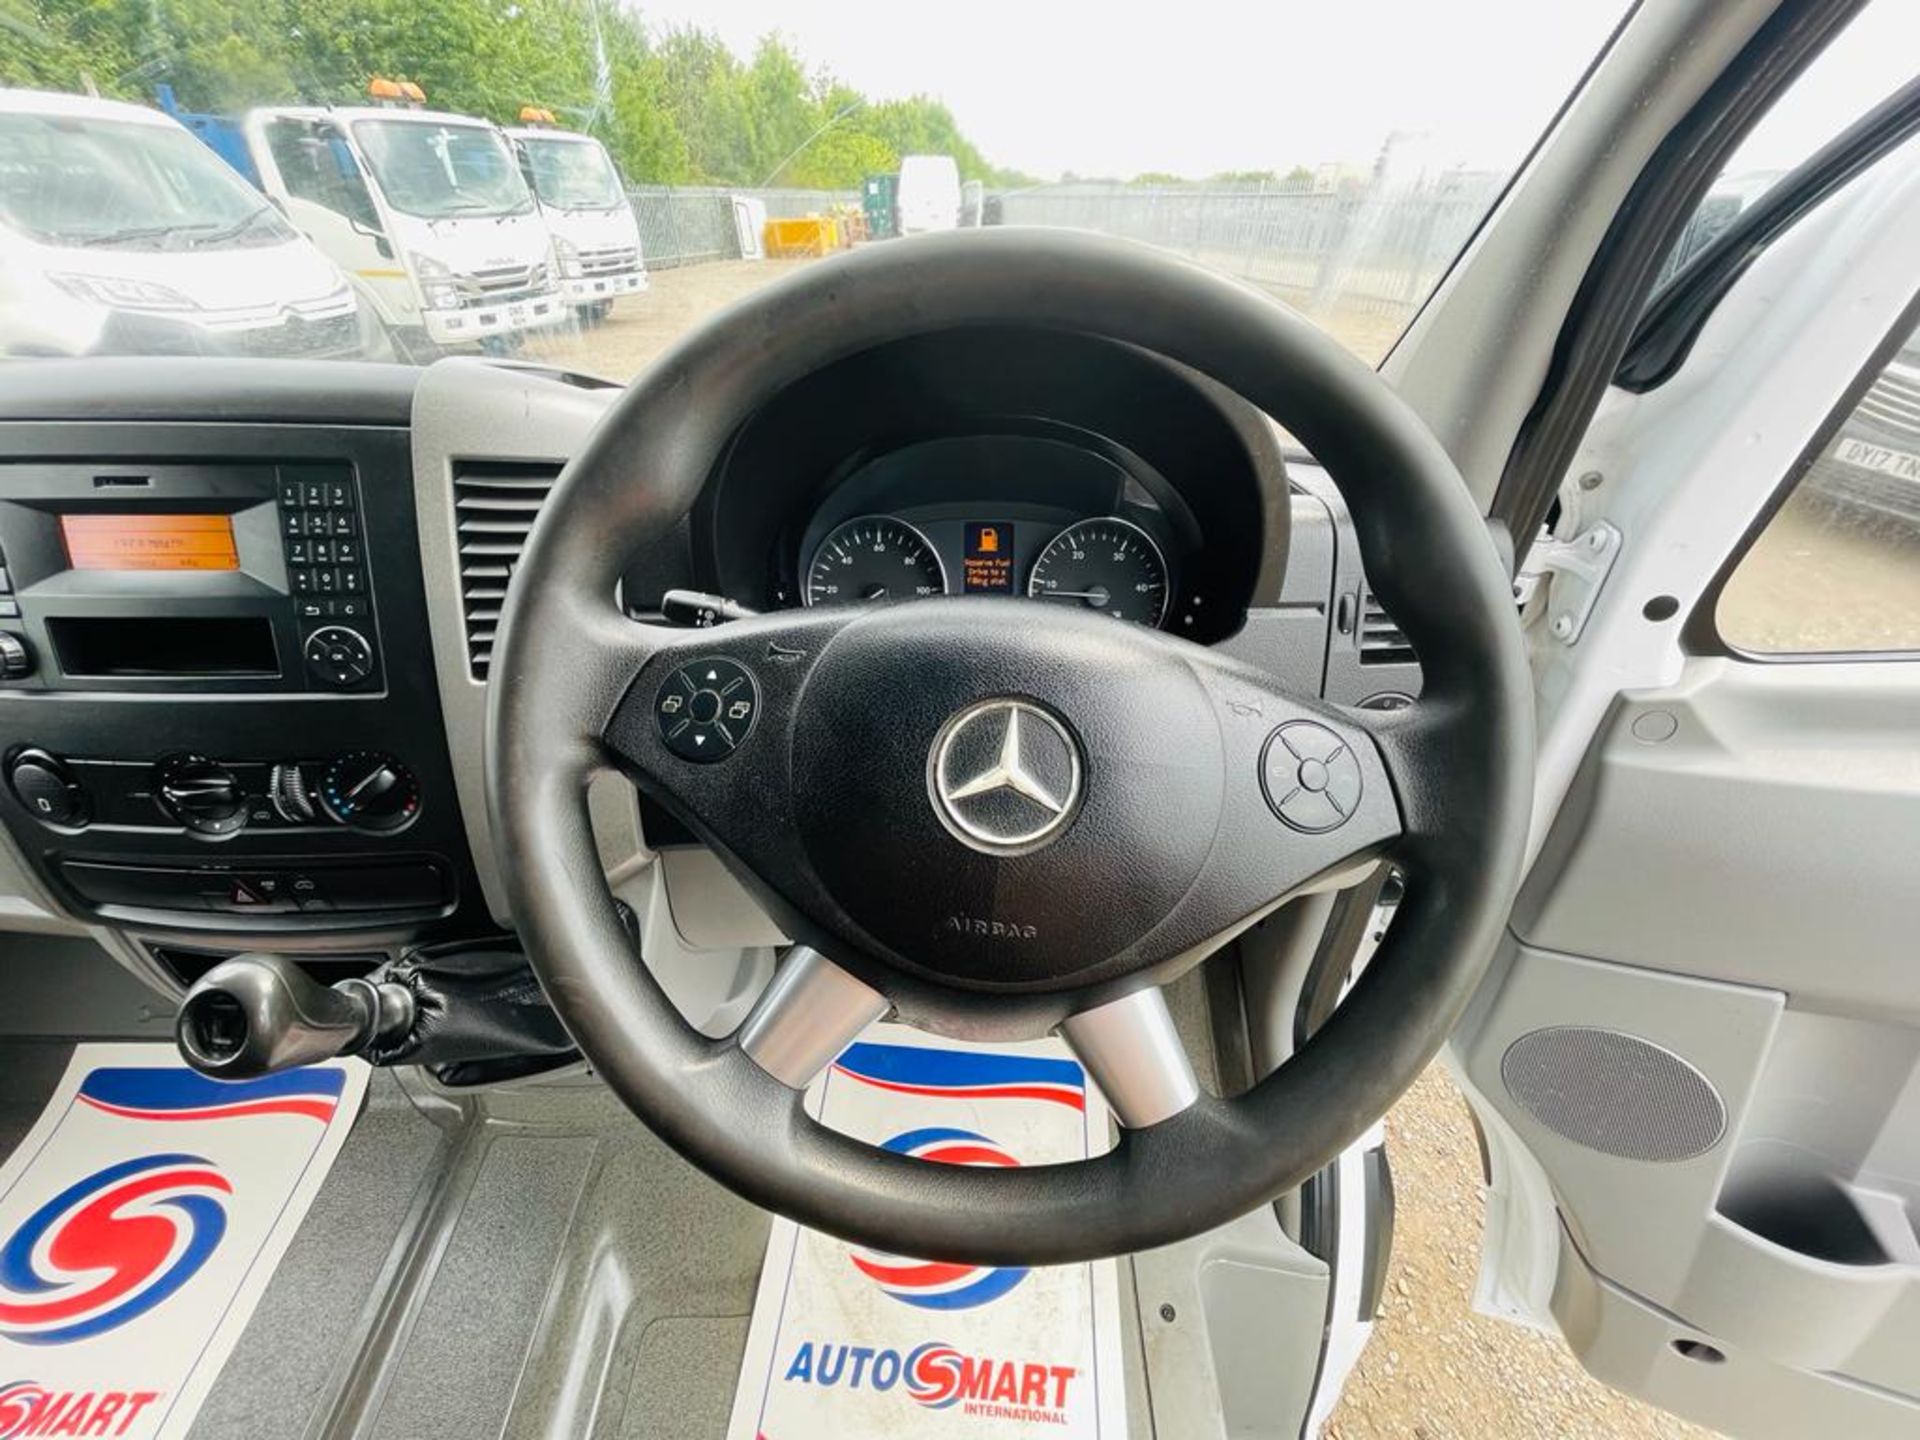 ** ON SALE ** Mercedes Benz Sprinter 314 CDI Bluetec L3 H3 2018 '18 Reg' Euro 6 - ULEZ Compliant - Image 23 of 24